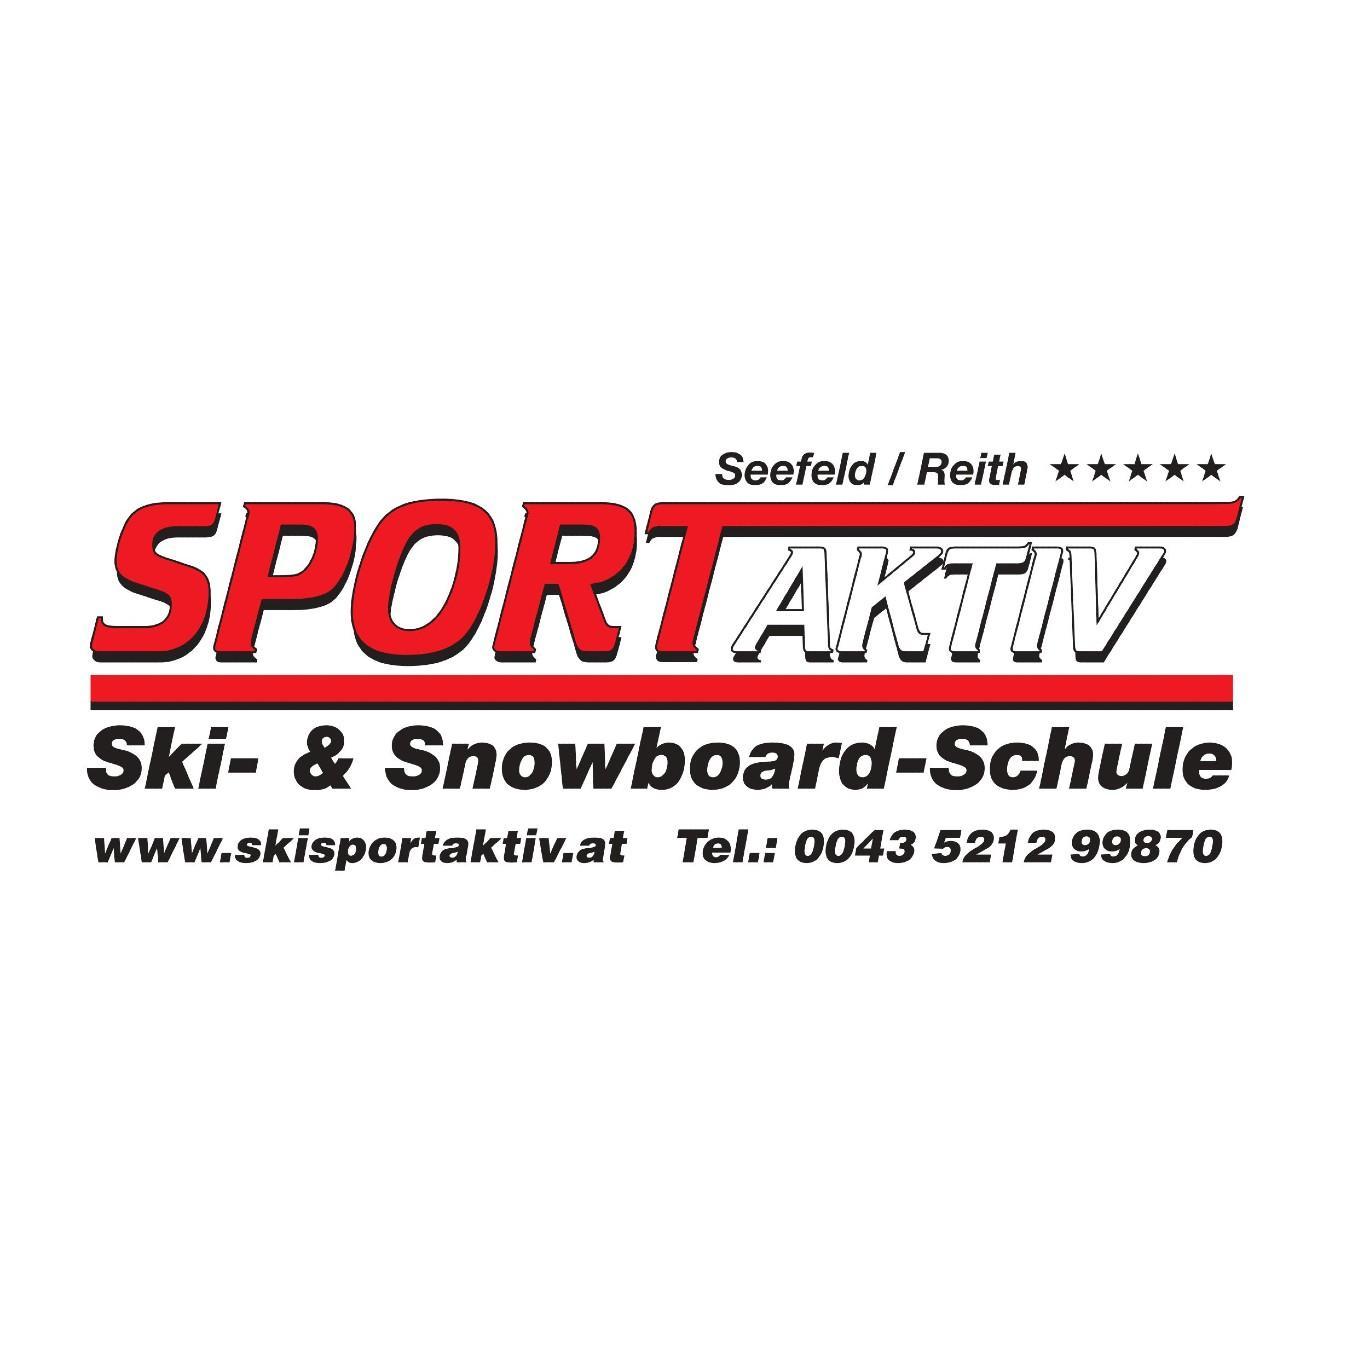 Adult Ski Lessons for All Levels from Ski School Sport Aktiv Seefeld